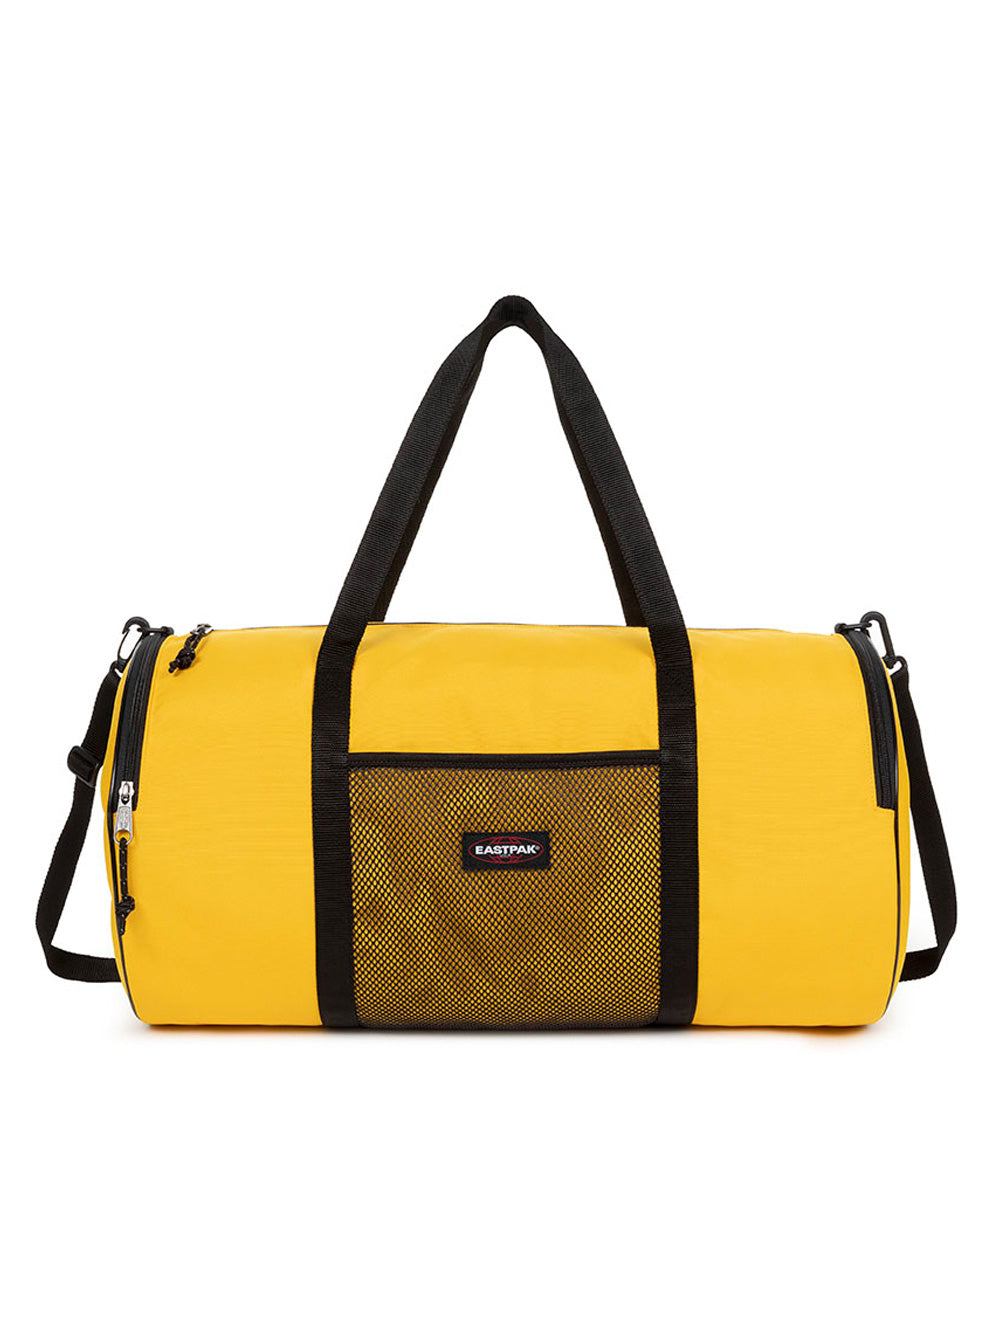 Large Yellow Duffle Bag